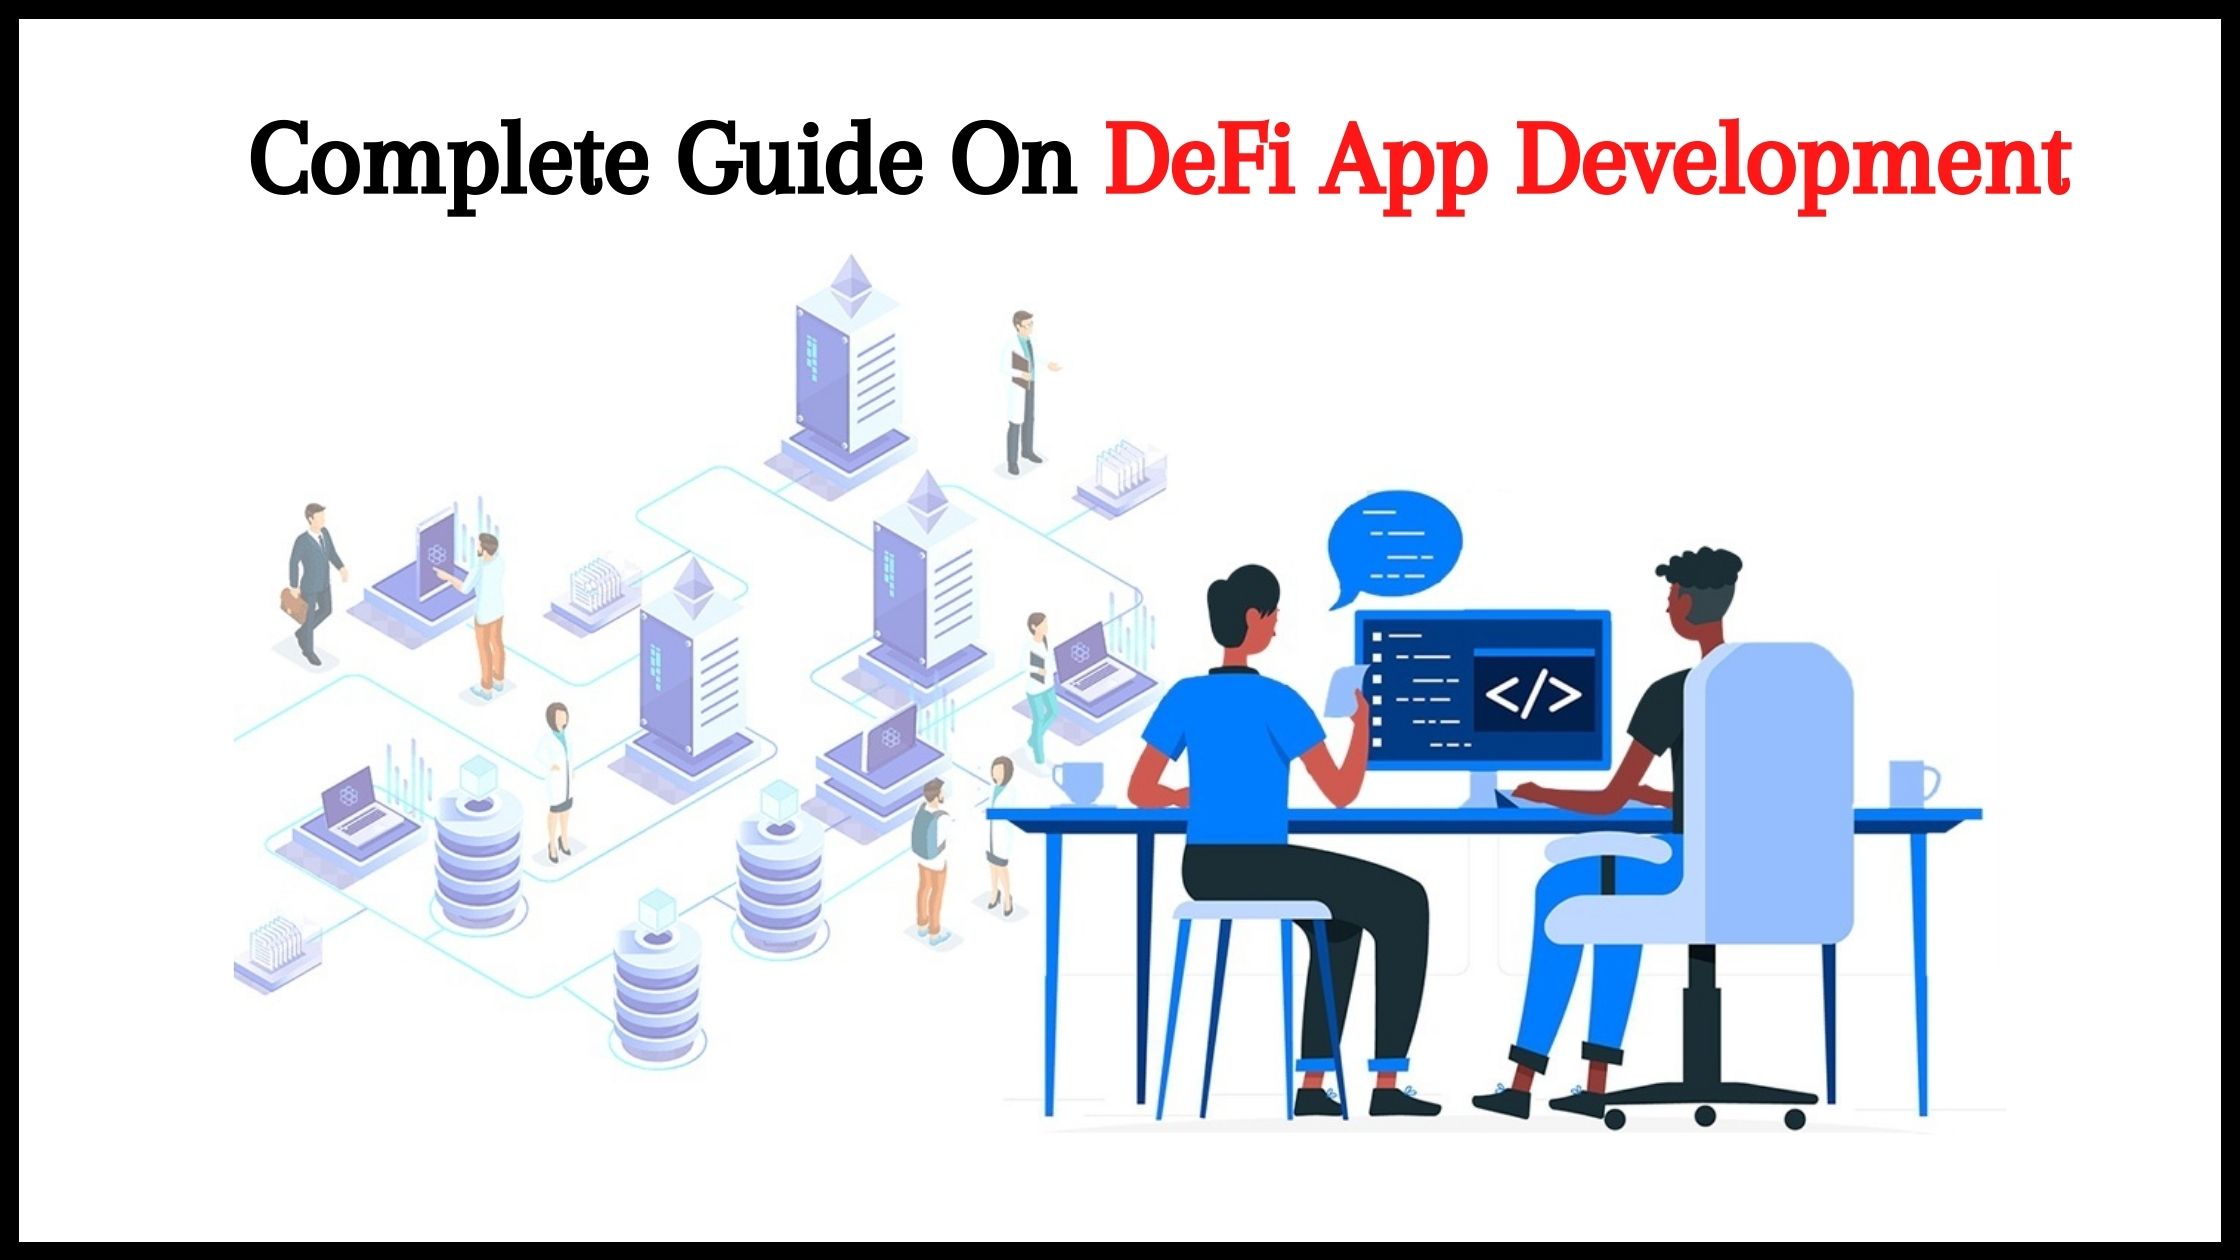 Complete Guide On DeFi App Development